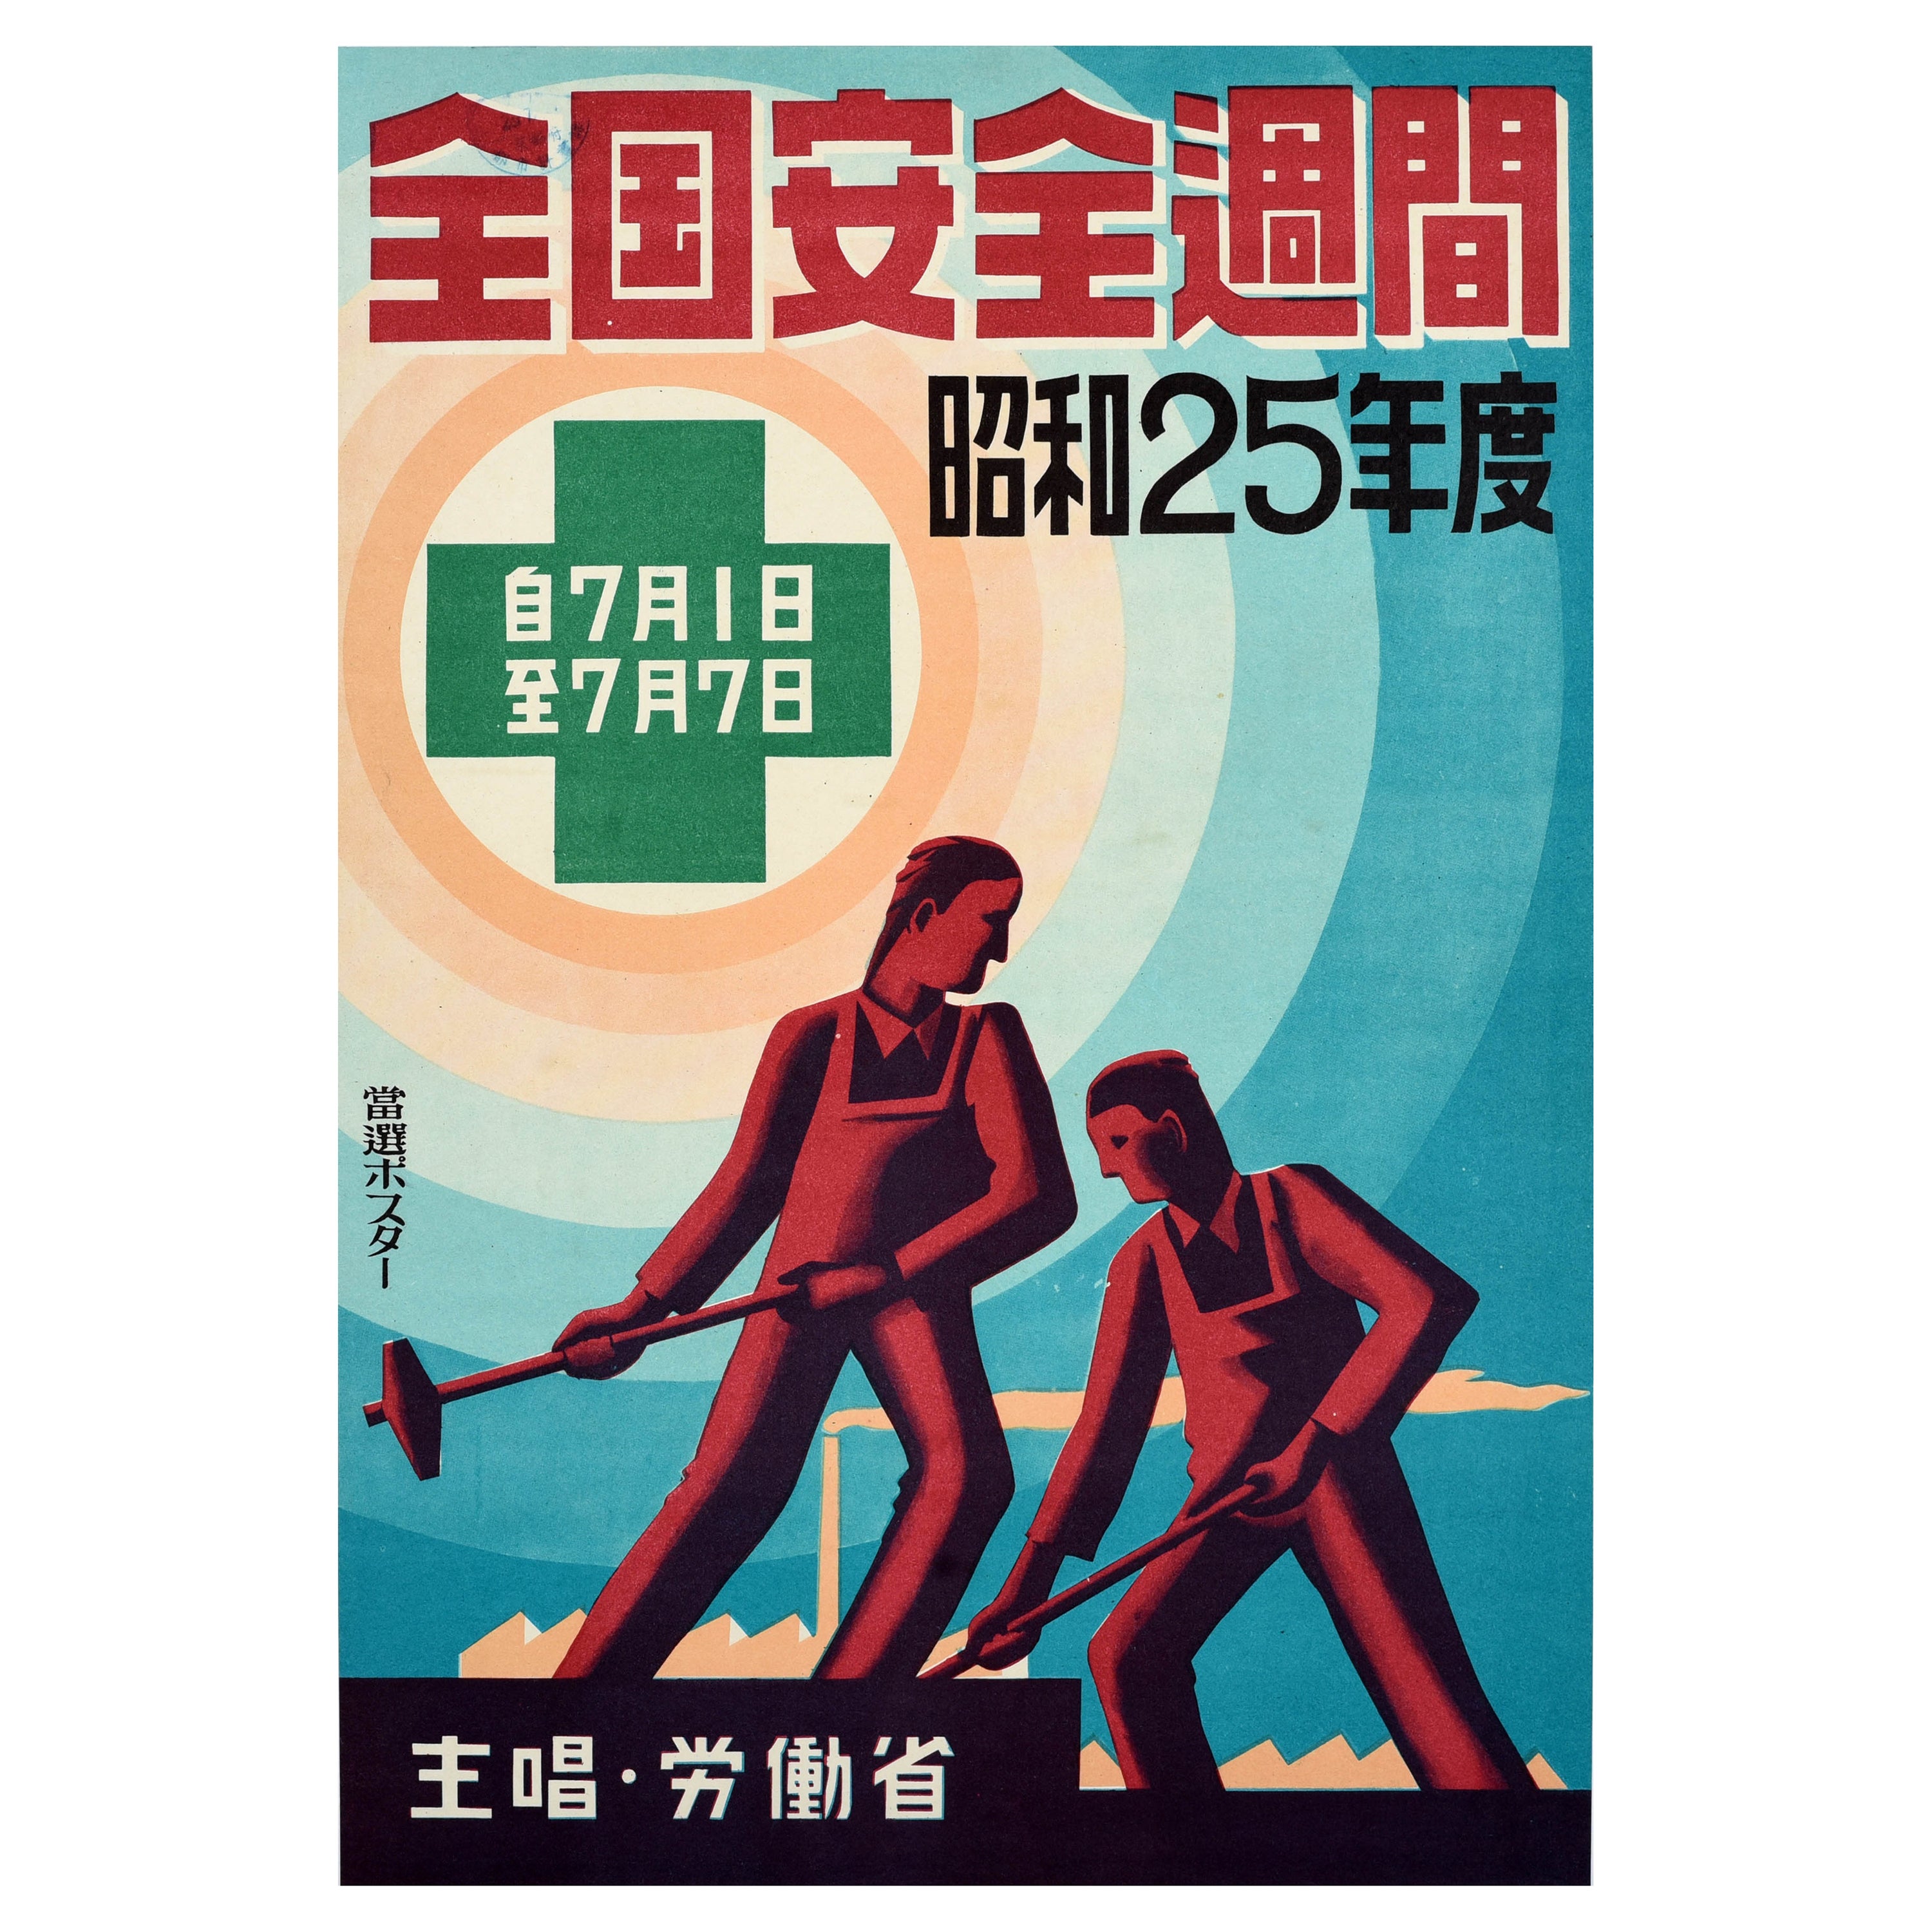 Original Vintage Health And Safety Propaganda Poster National Safety Week Japan For Sale